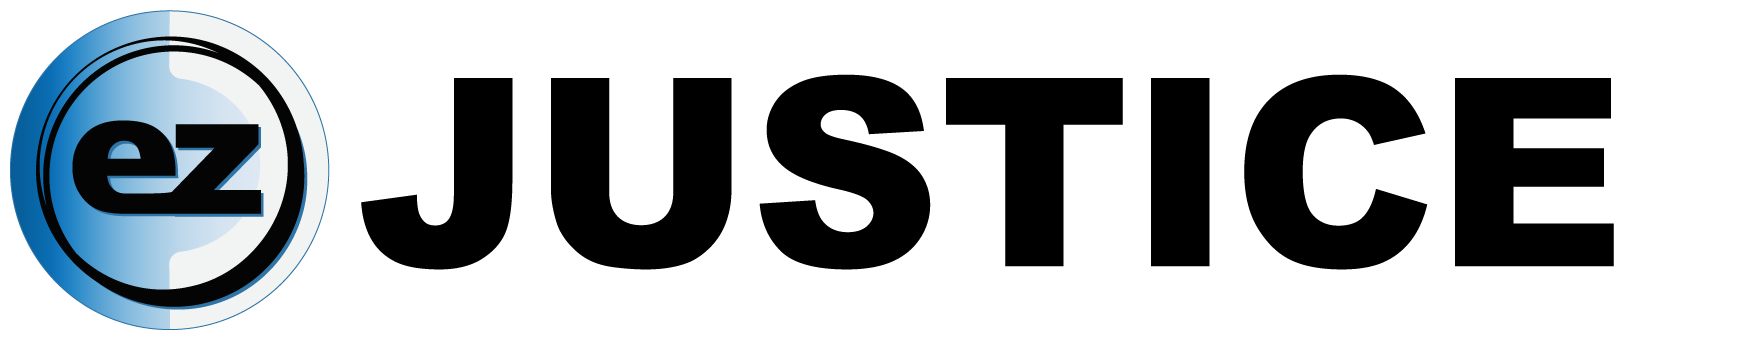 ezJustice Logo